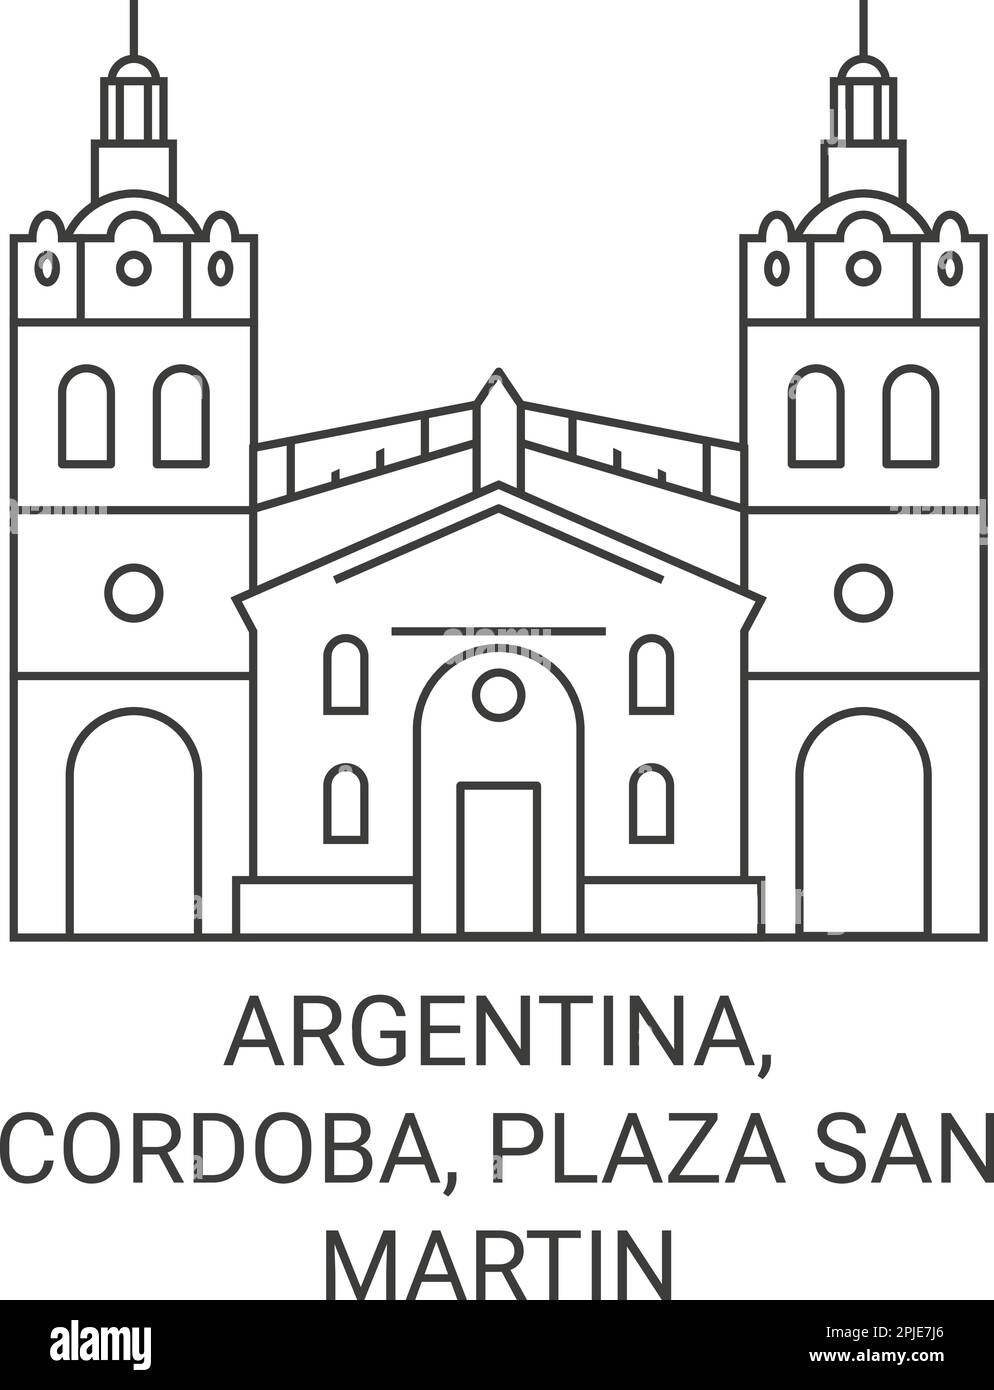 Argentina, Cordoba, Plaza San Martin travel landmark vector illustration Stock Vector